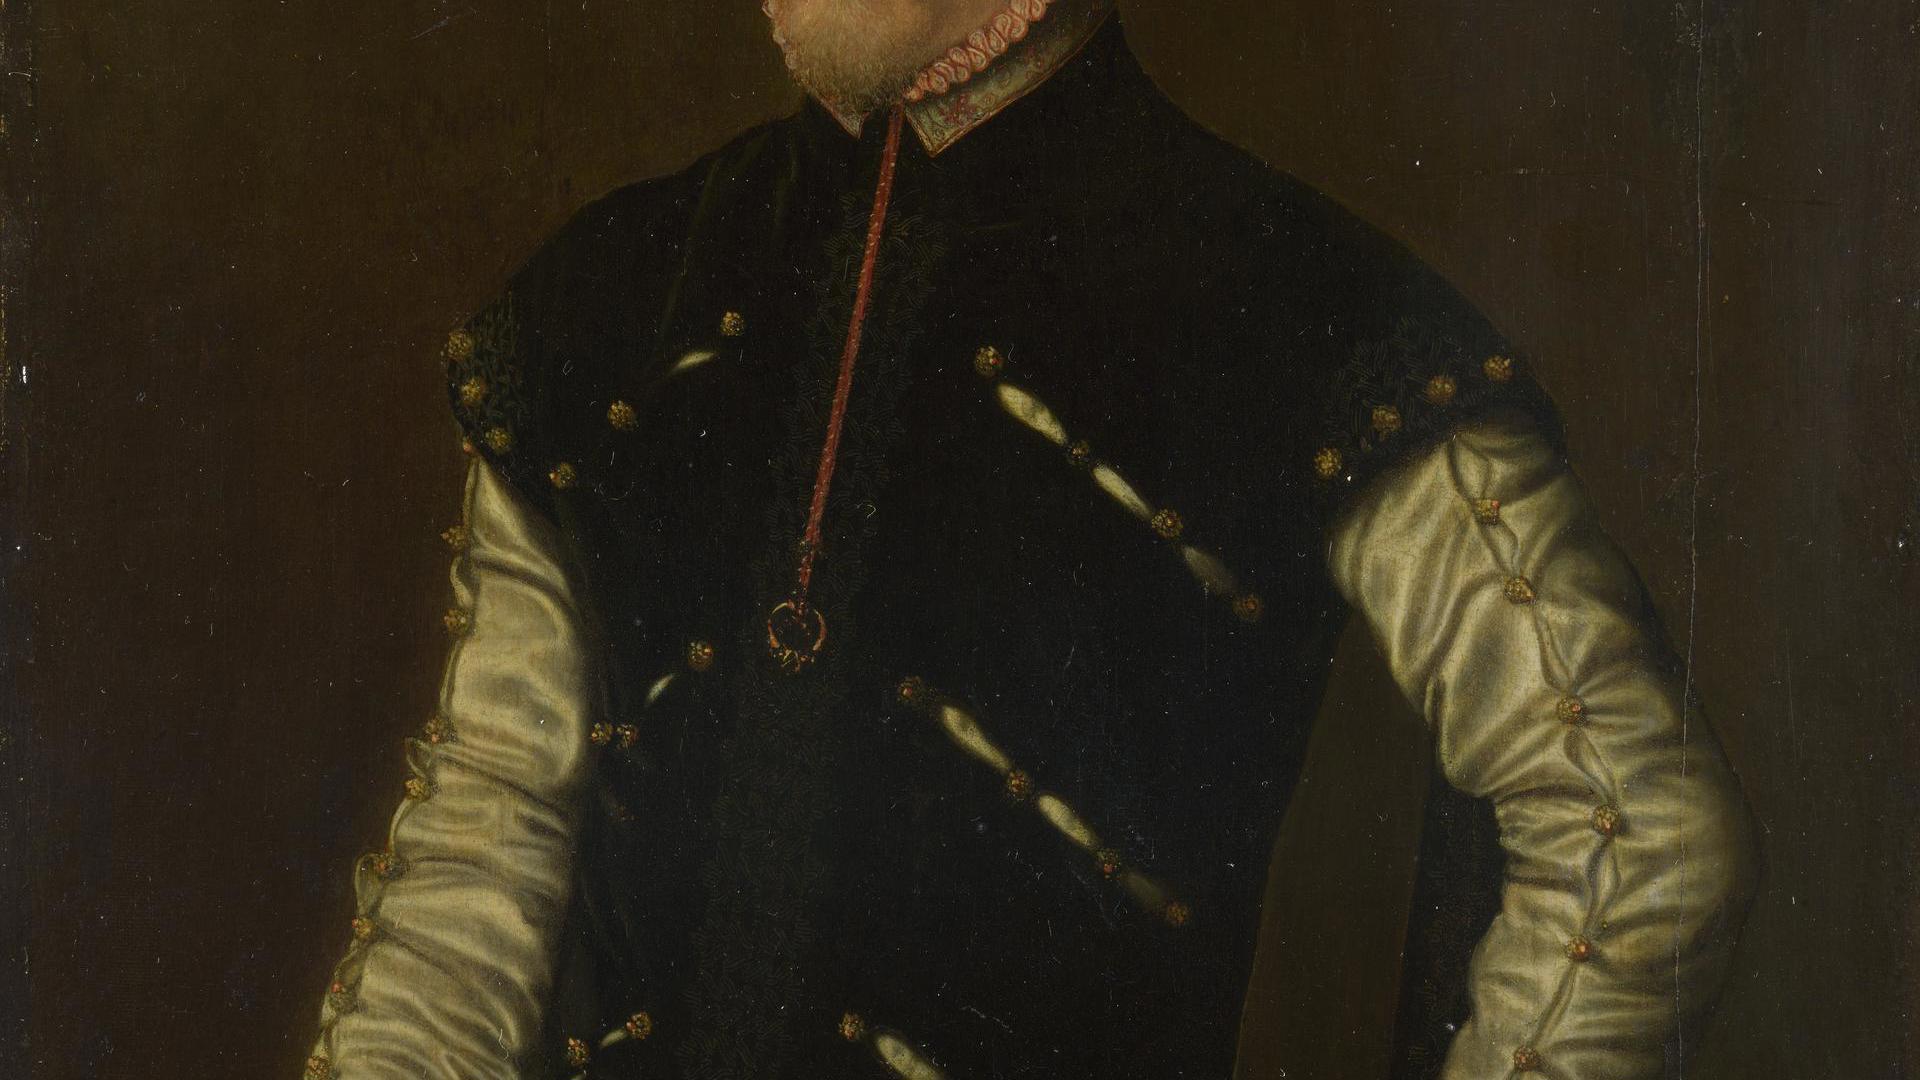 Portrait of a Man by Catharina van Hemessen